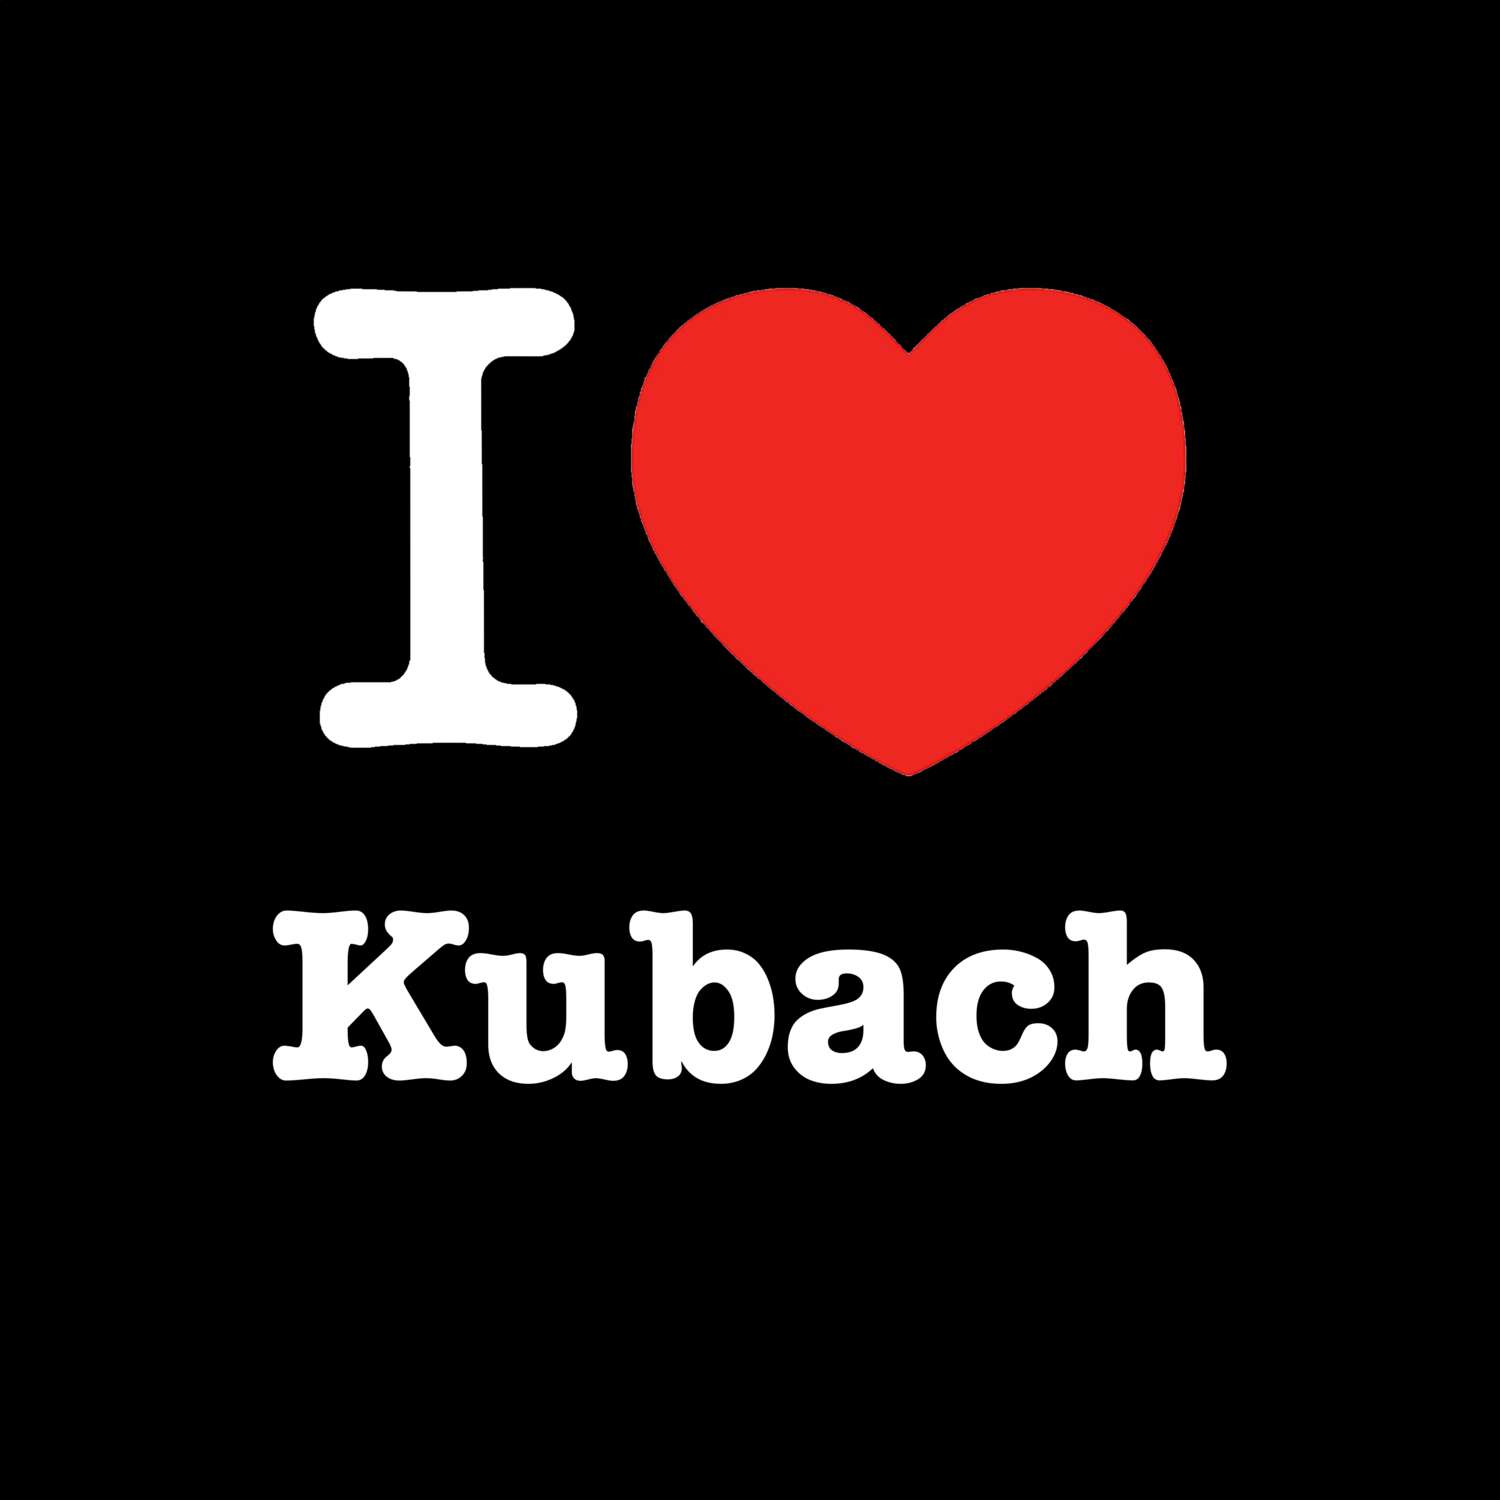 Kubach T-Shirt »I love«